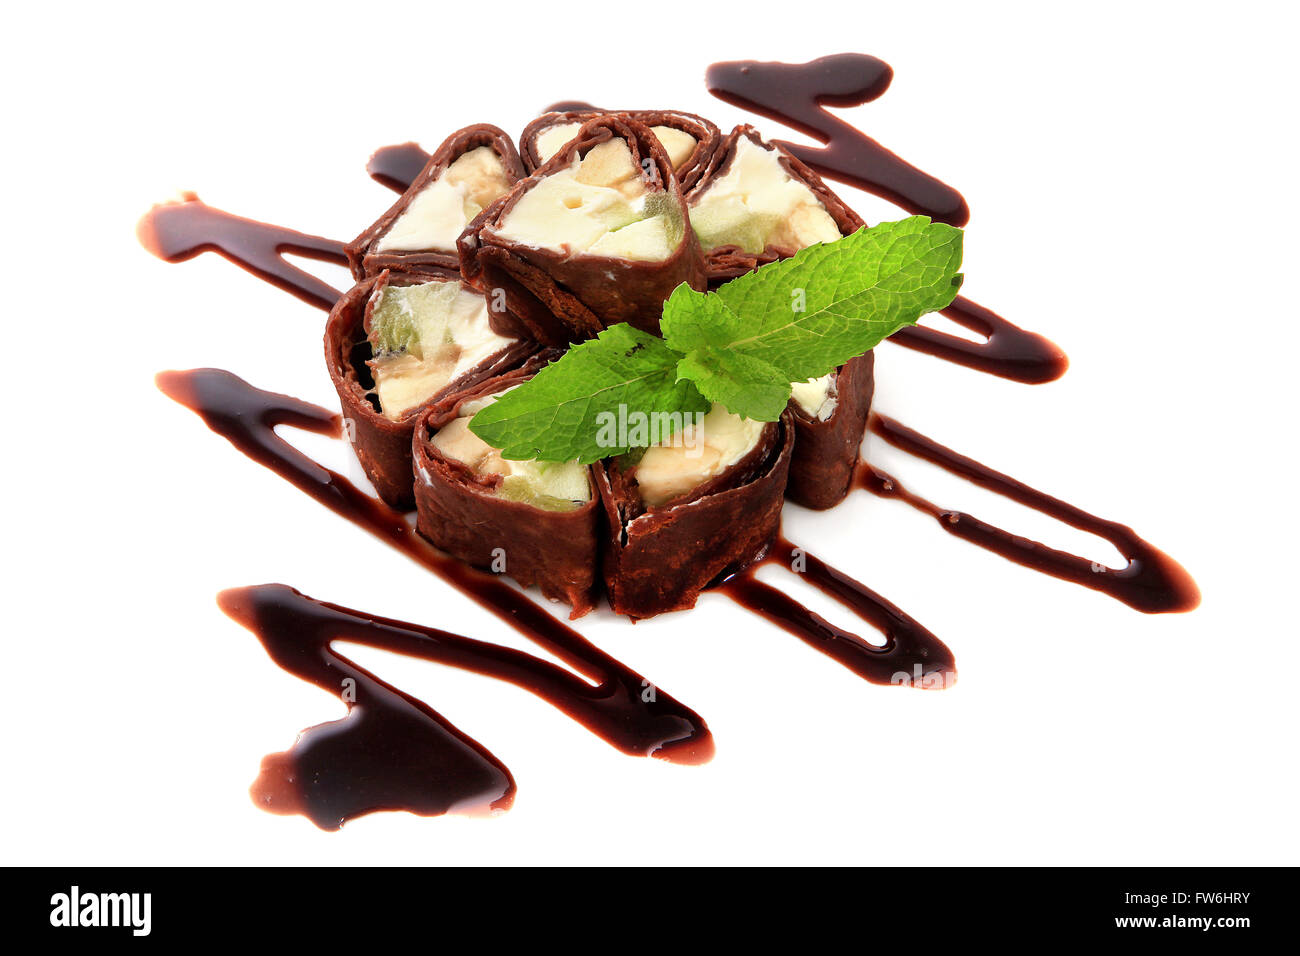 Chocolate Sushi Roll garnished with fruit Stock Photo